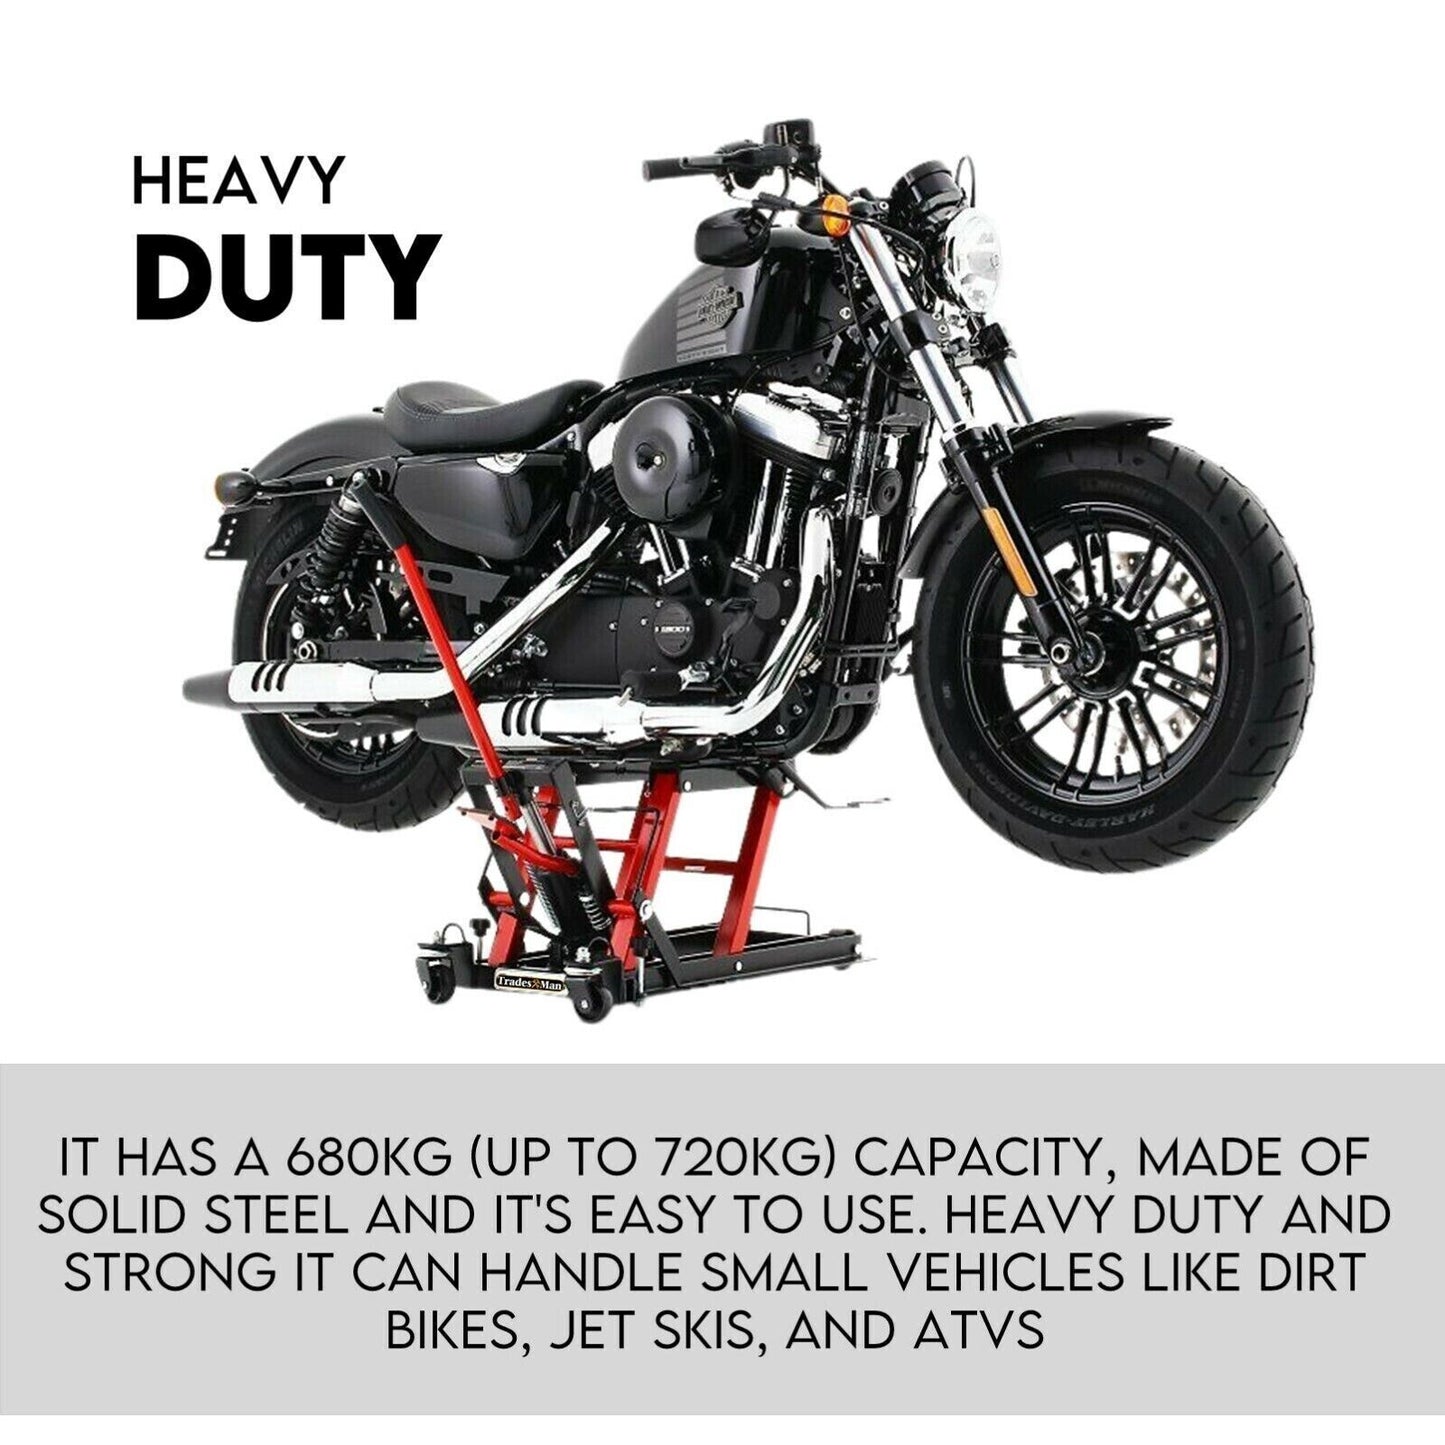 Motorcycle 680kg Bike Lift Stand Jack Hoist Atv Hydraulic Super Low Profile +S